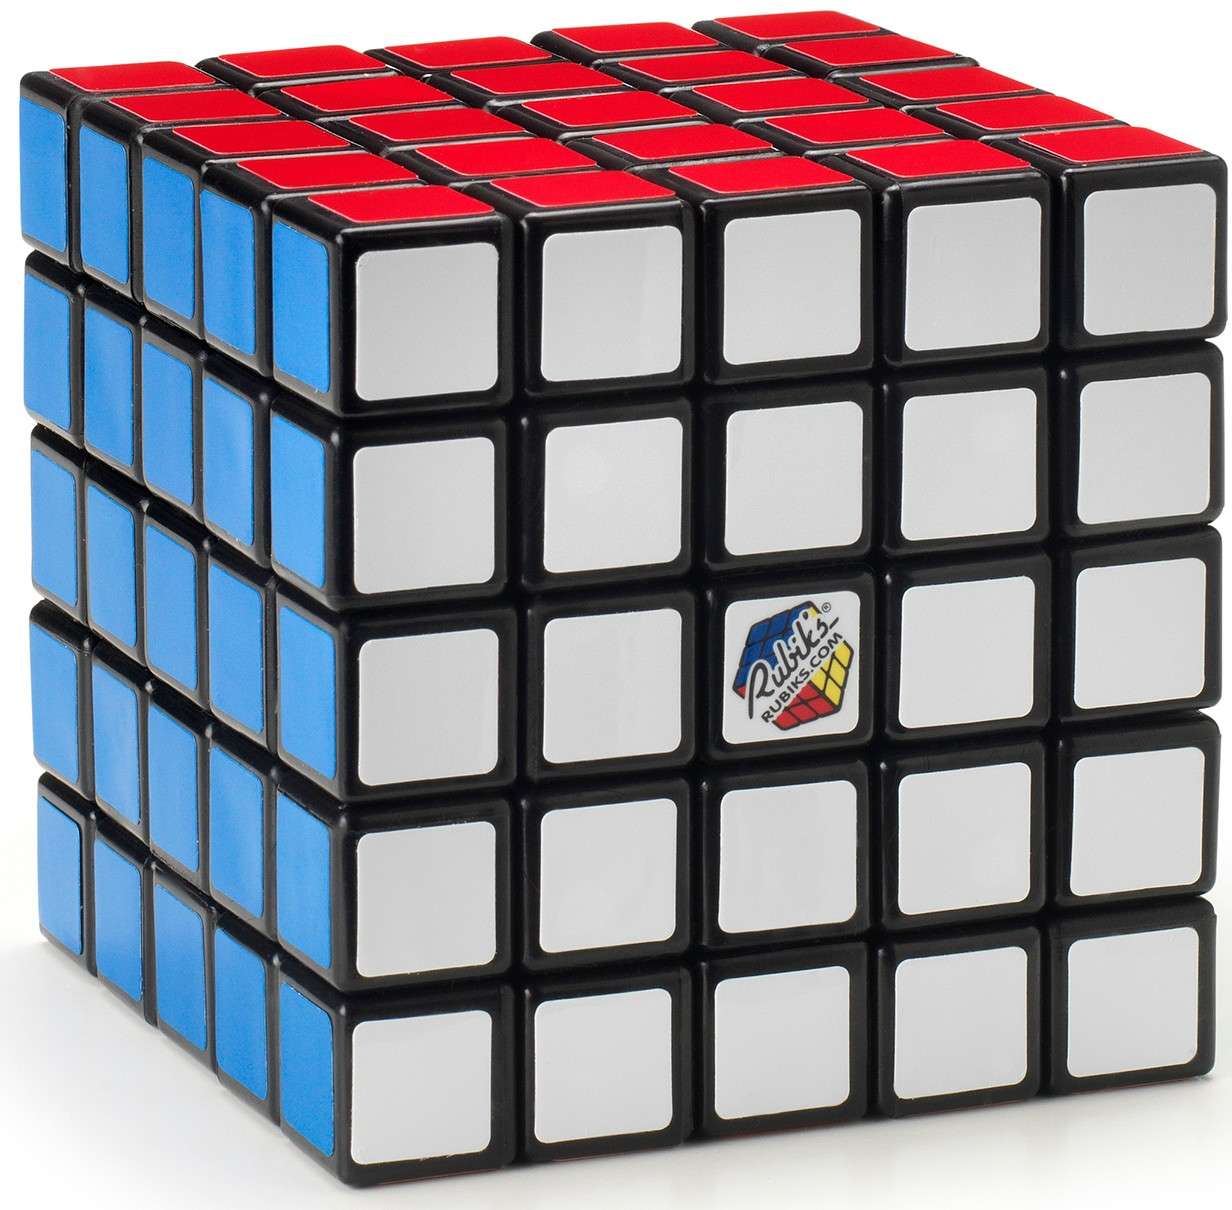 Oryginalna Kostka Rubika profesjonalna zabawka gra logiczna Professor Cube kolorowa 5x5x5 Rubik's